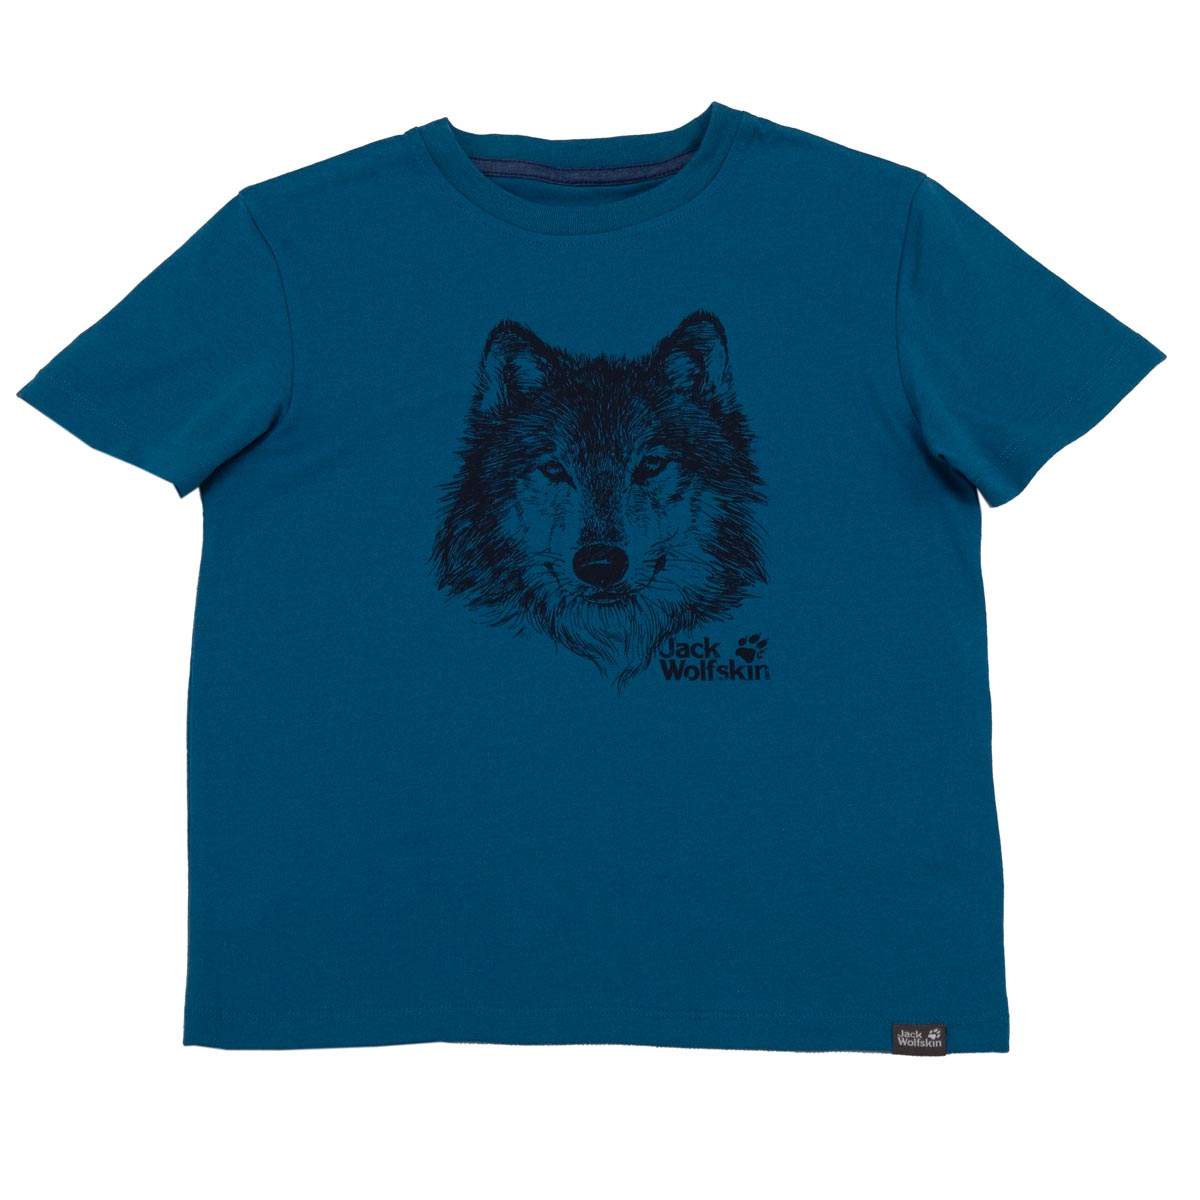 Jack Wolfskin Brand Tee T-Shirt Kinder kurzarm Shirt Baumwolle 1607241-1087 128